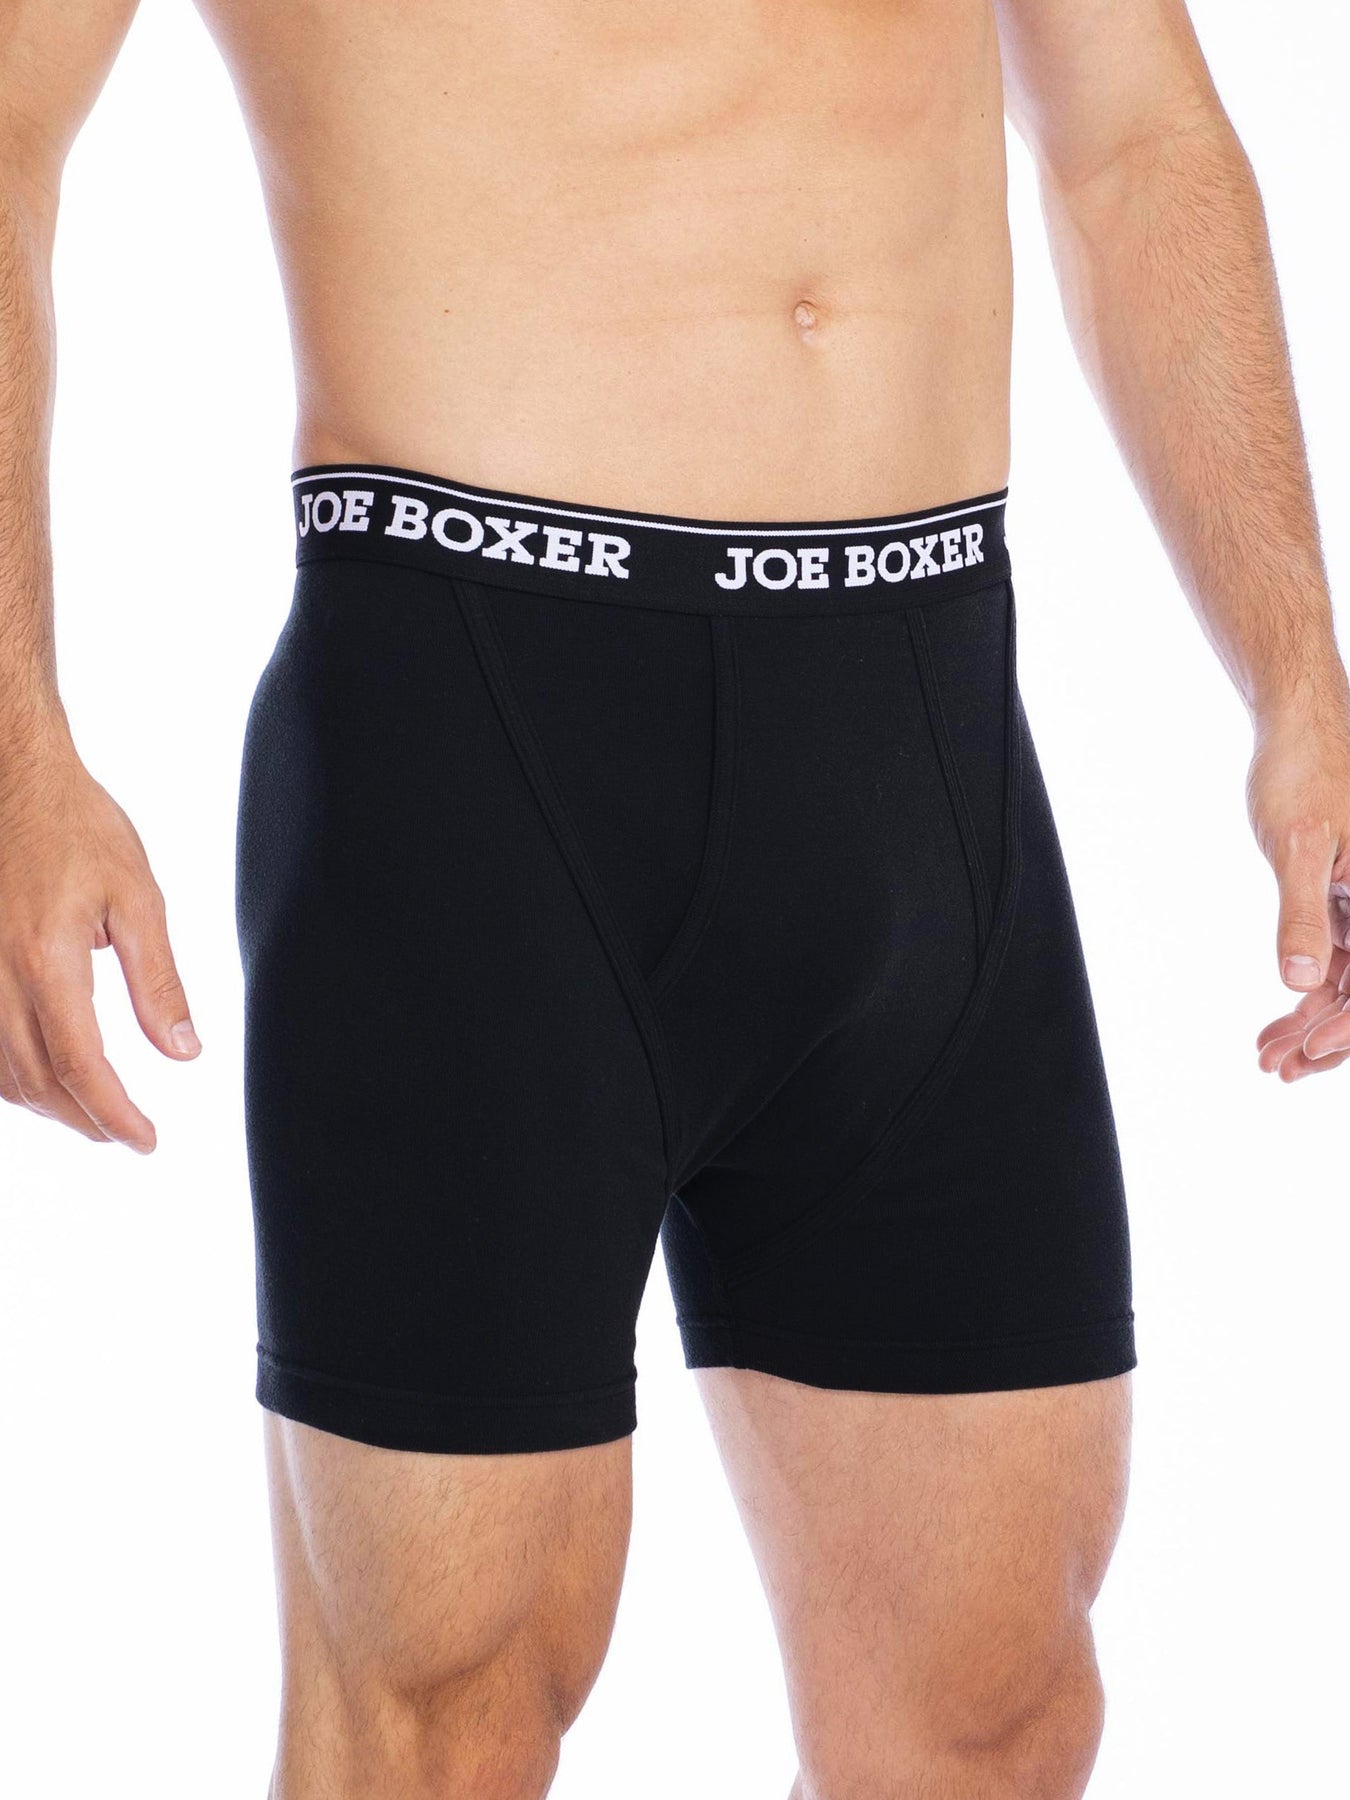 Dream Catcher Boxer Briefs Mens Underwear Men Pack of 1-6 Men's Underwear  for Men S M L XL XXL at  Men's Clothing store